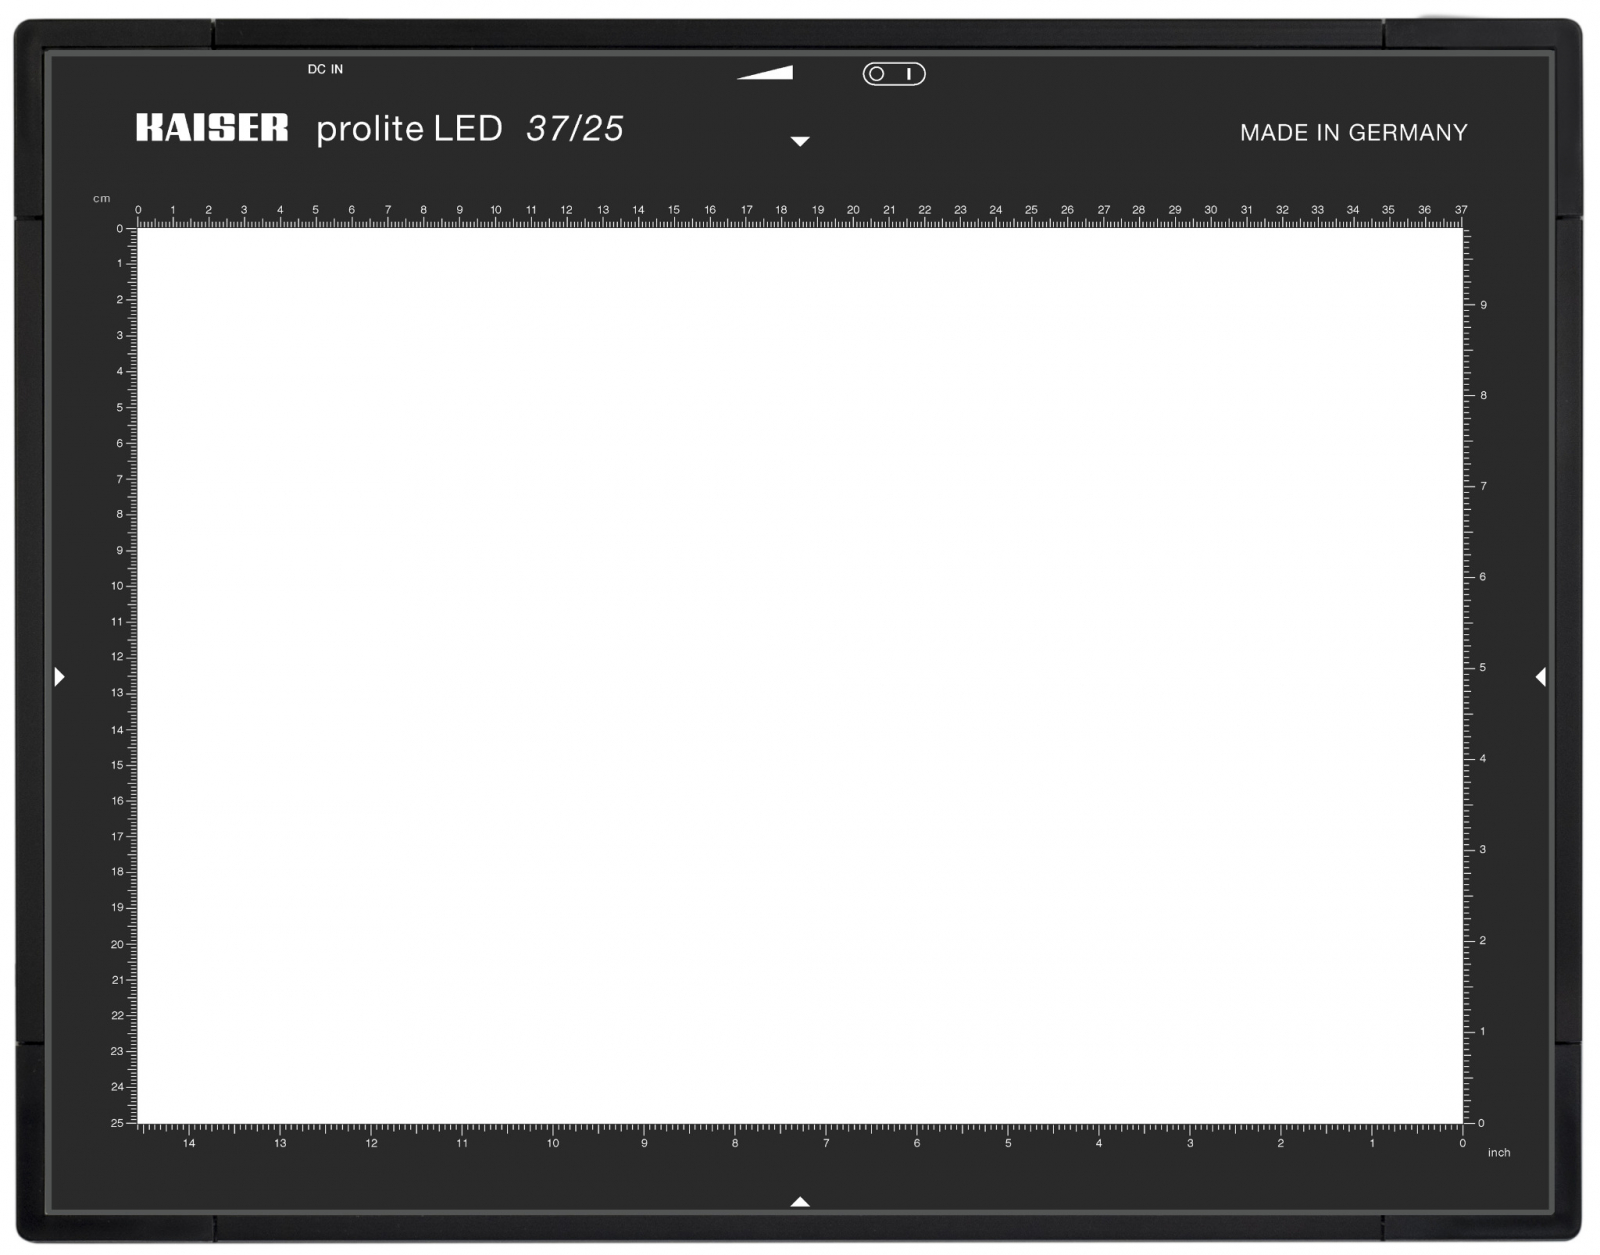 KAISER Profi-Leuchtplatte prolite LED 37/25, 37x25cm Leuchtfläche